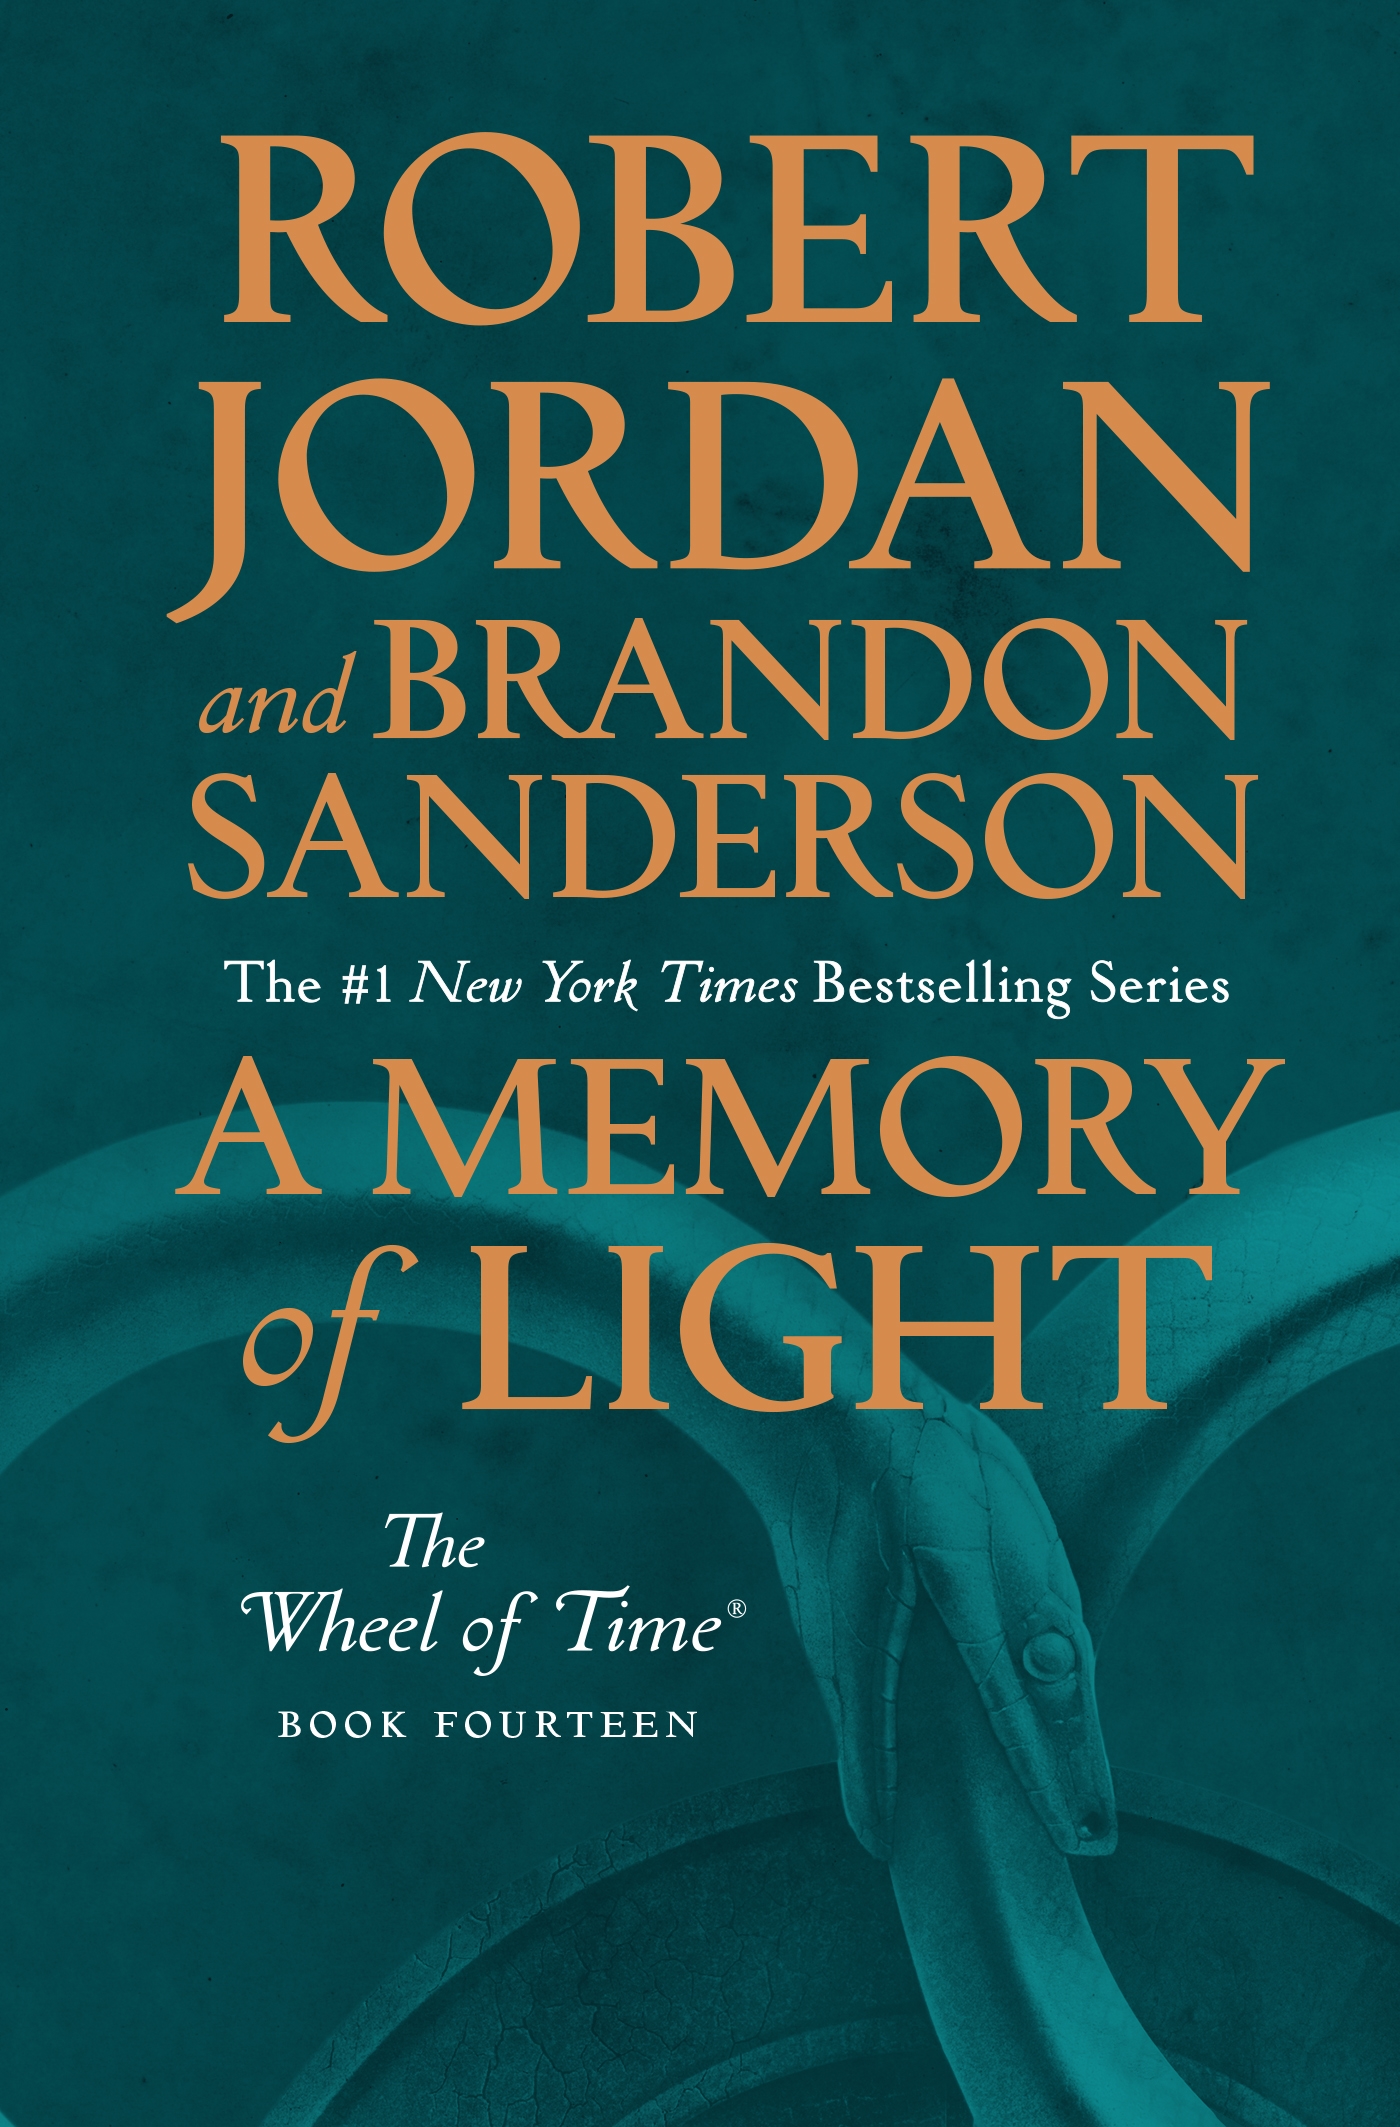 Book “A Memory of Light” by Robert Jordan, Brandon Sanderson — June 30, 2020